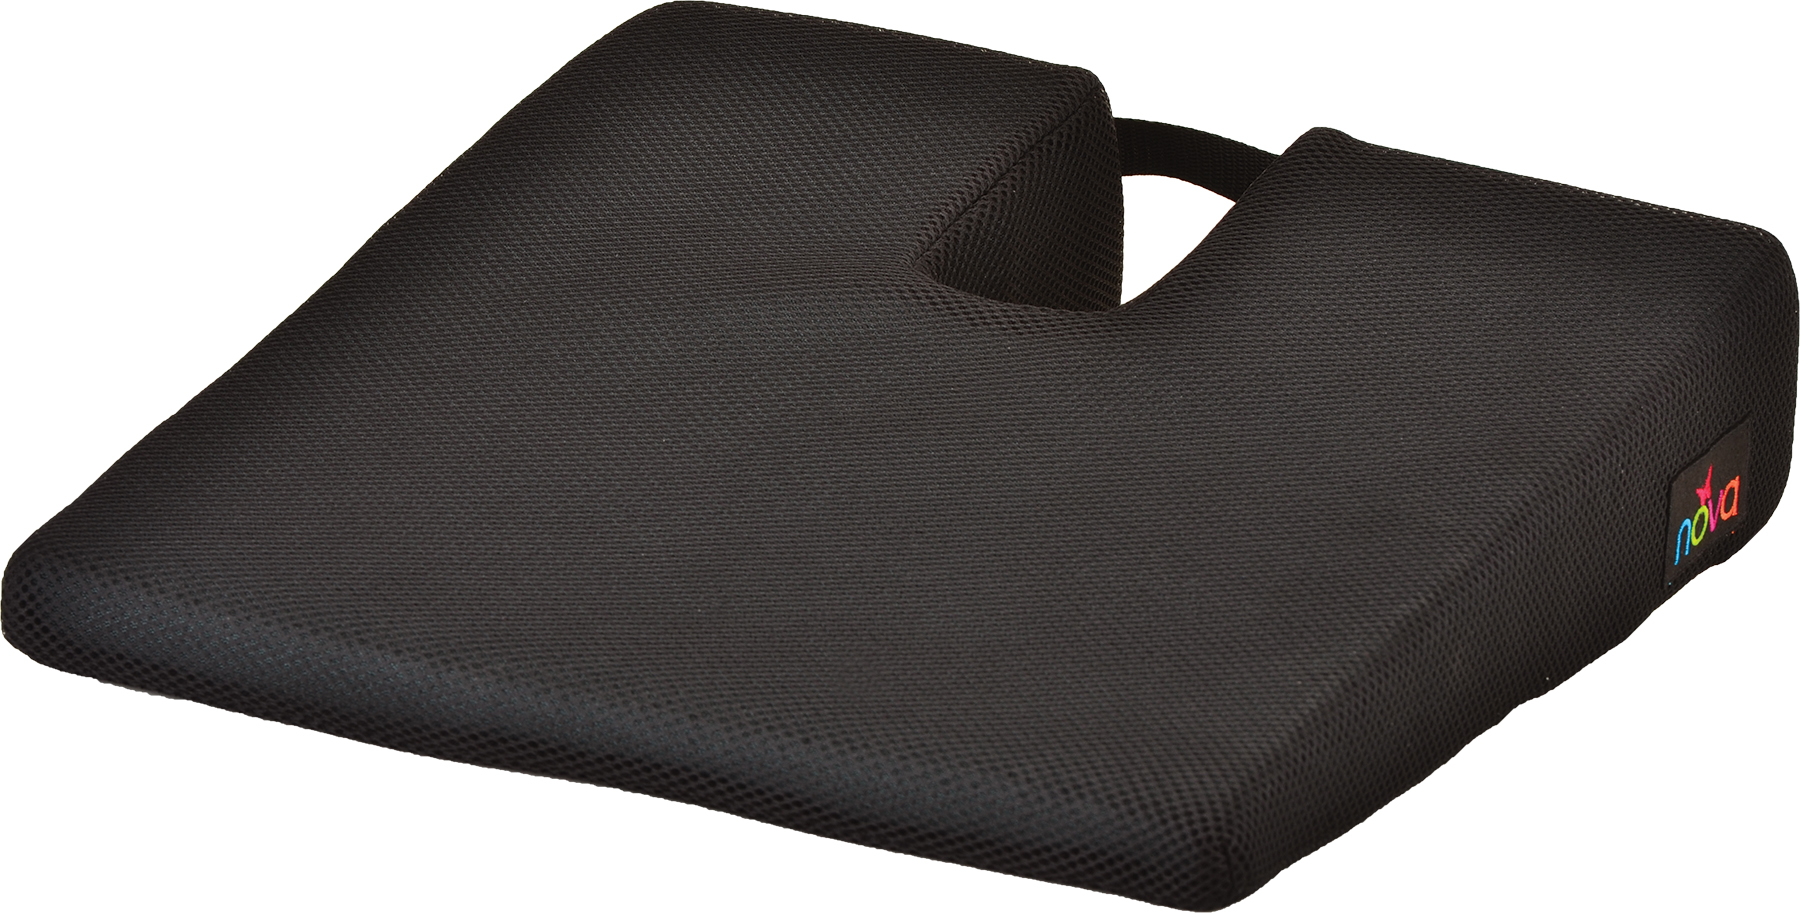 Wedge Car Seat Cushion Memory Foam Firm Coccyx Tailbone Orthopedic